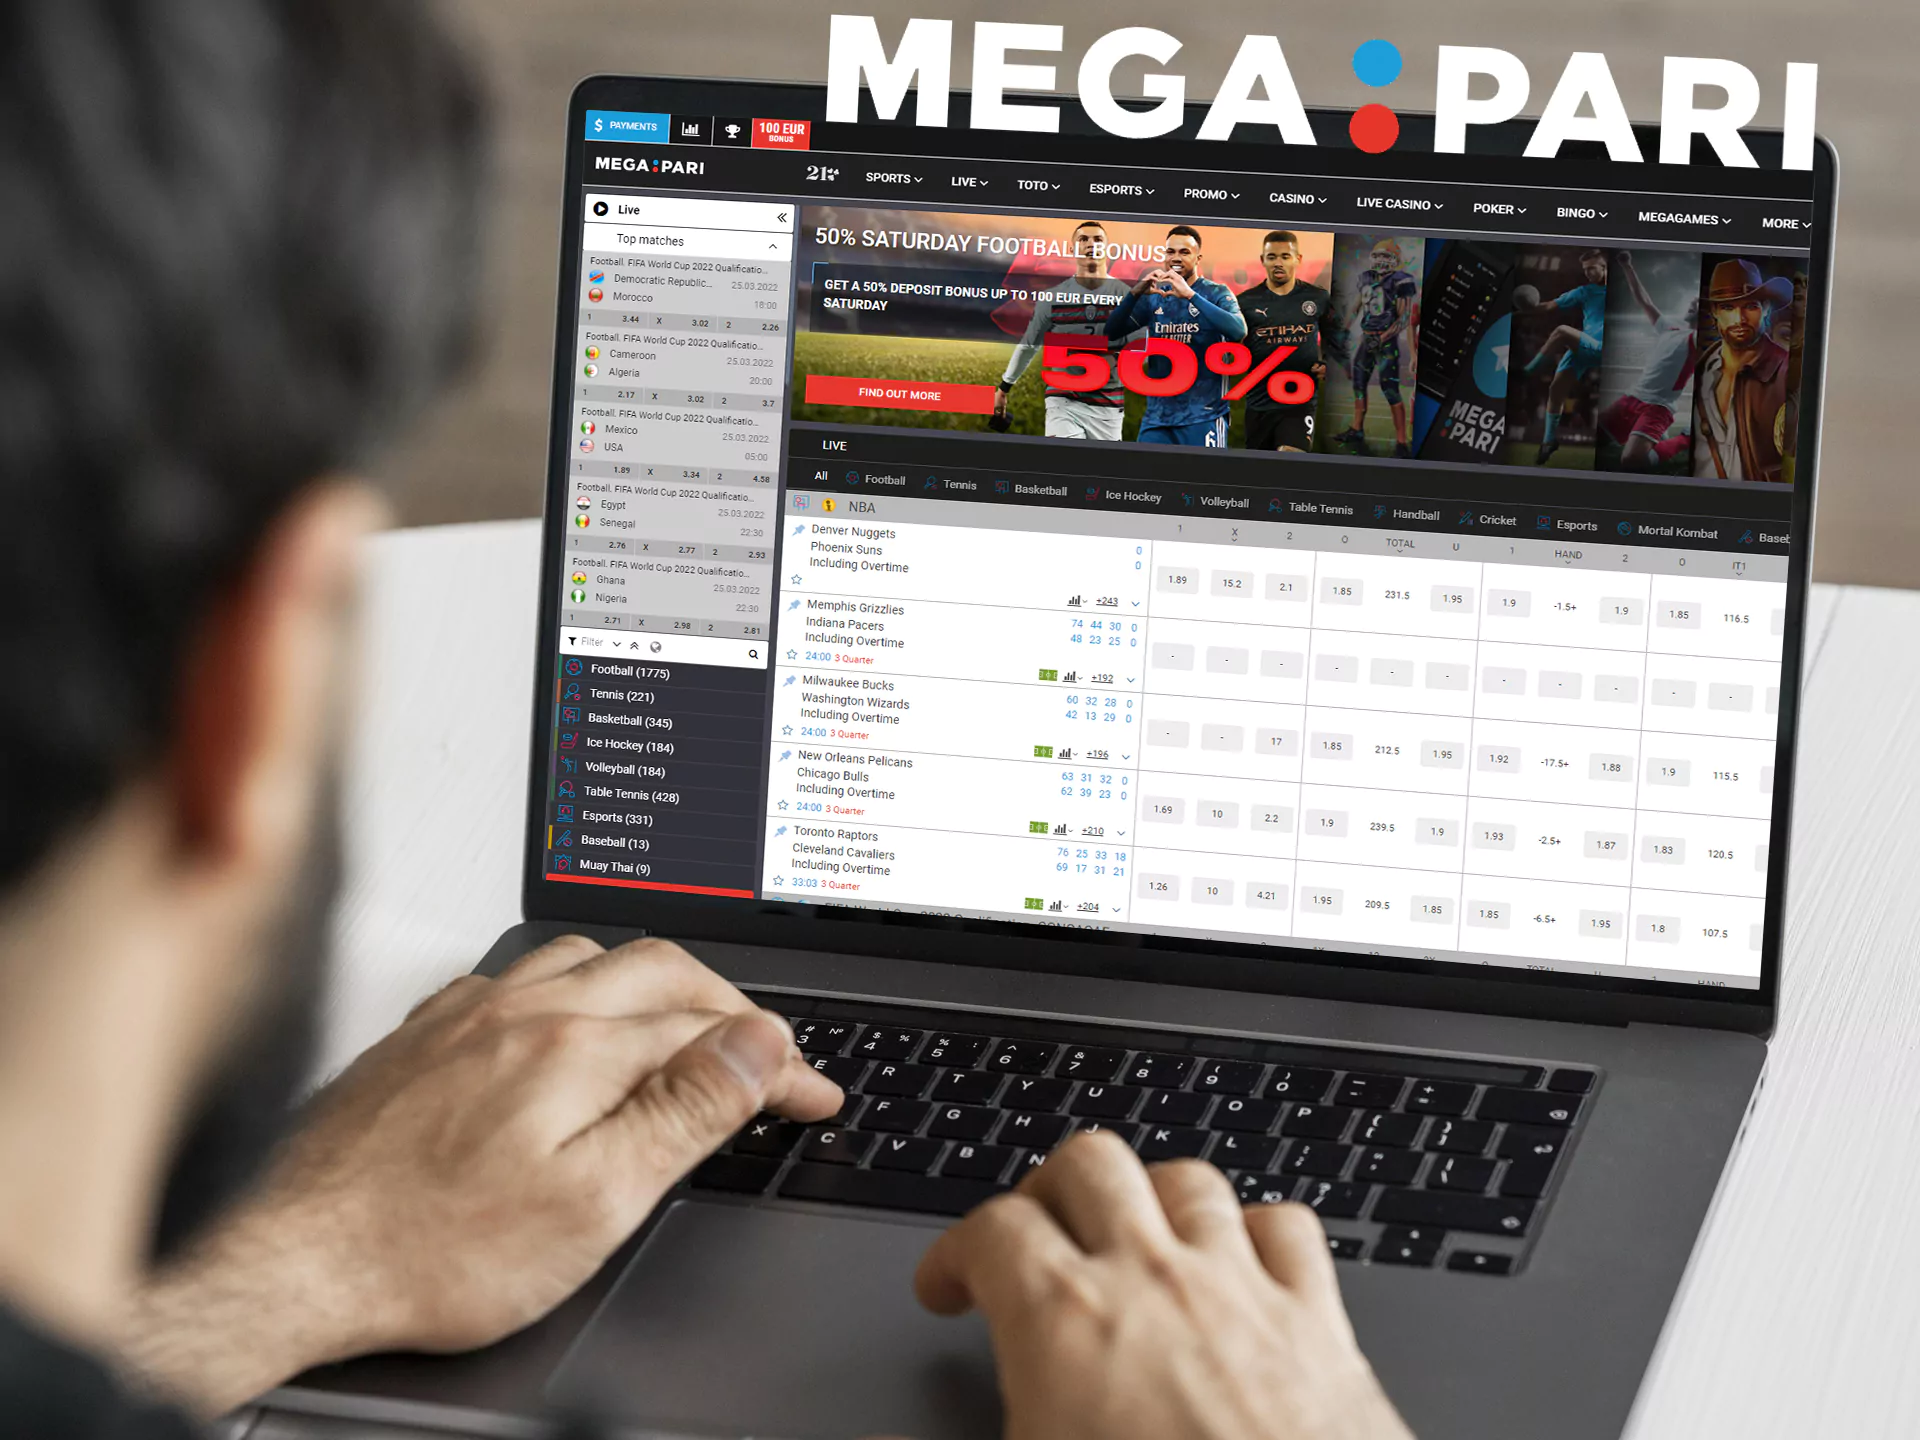 Start betting at Mega Pari is very easy.